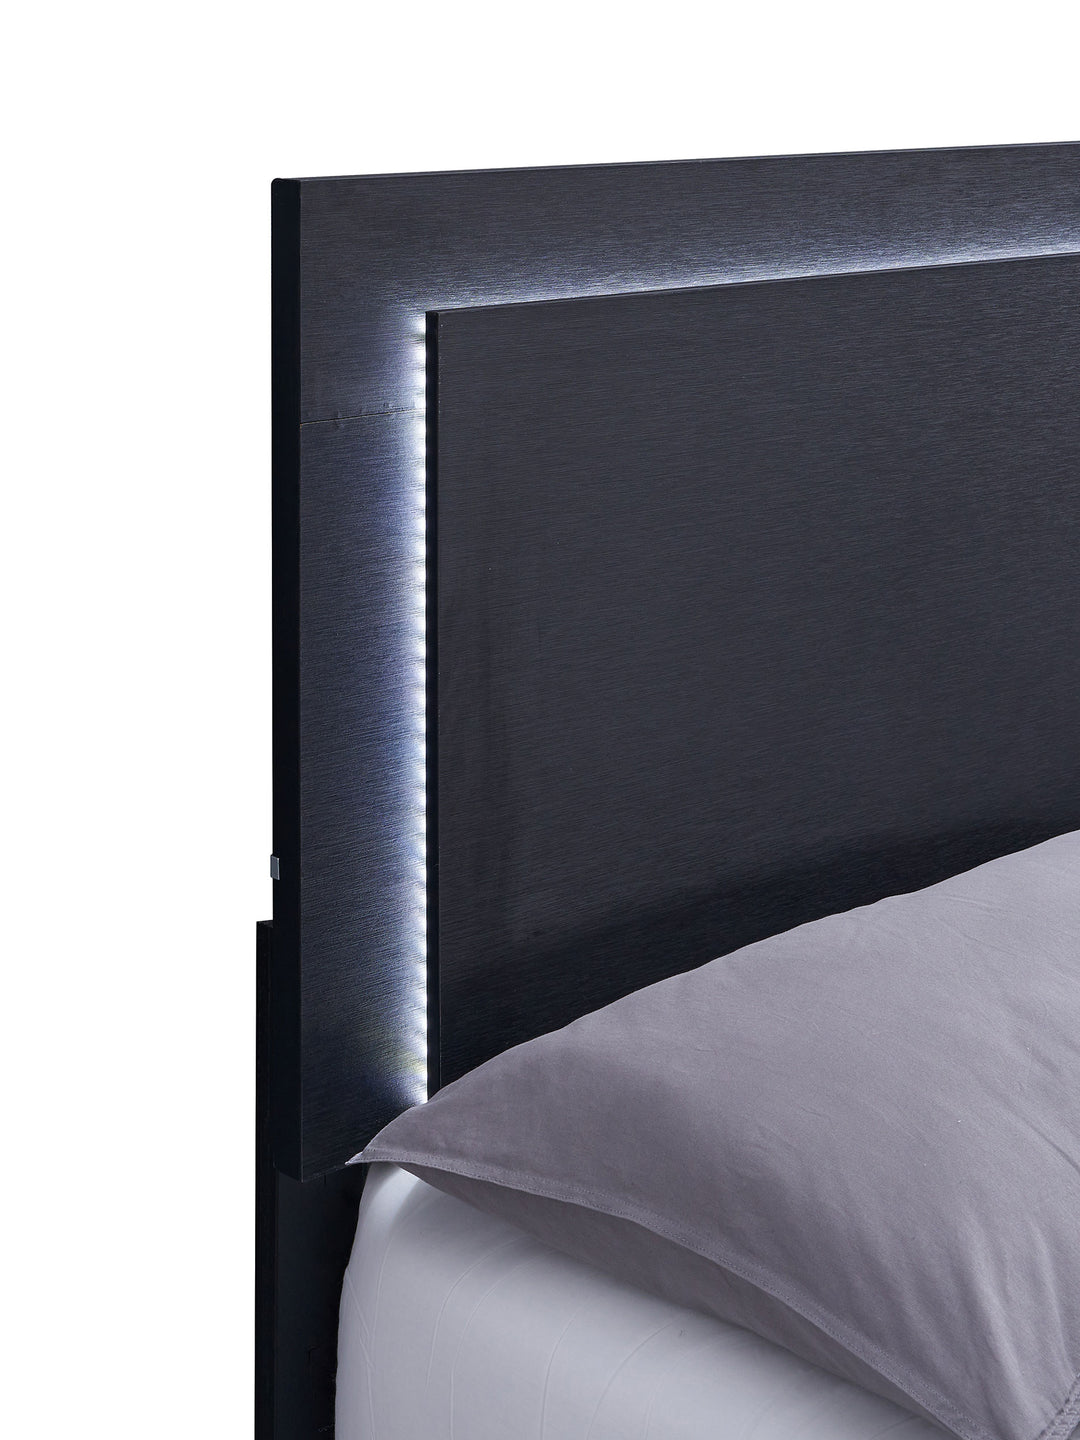 Marceline Eastern King Bed with LED Headboard Black_4